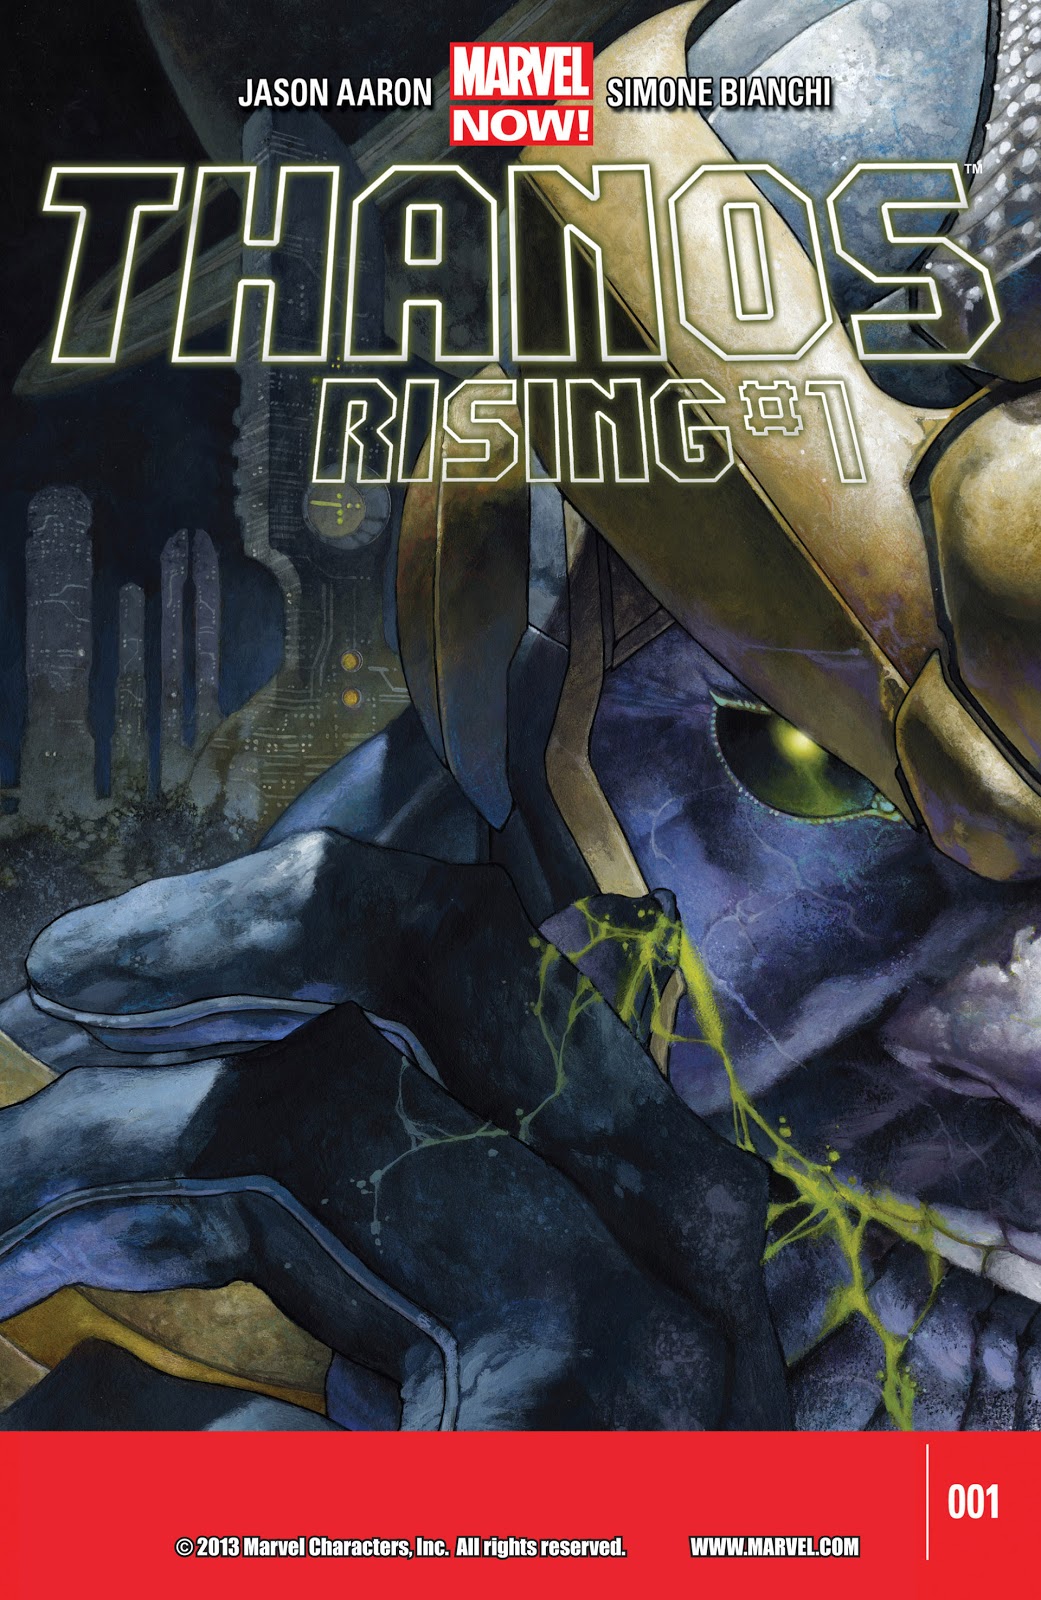 Leer Thanos Rising / Origen Online en Español